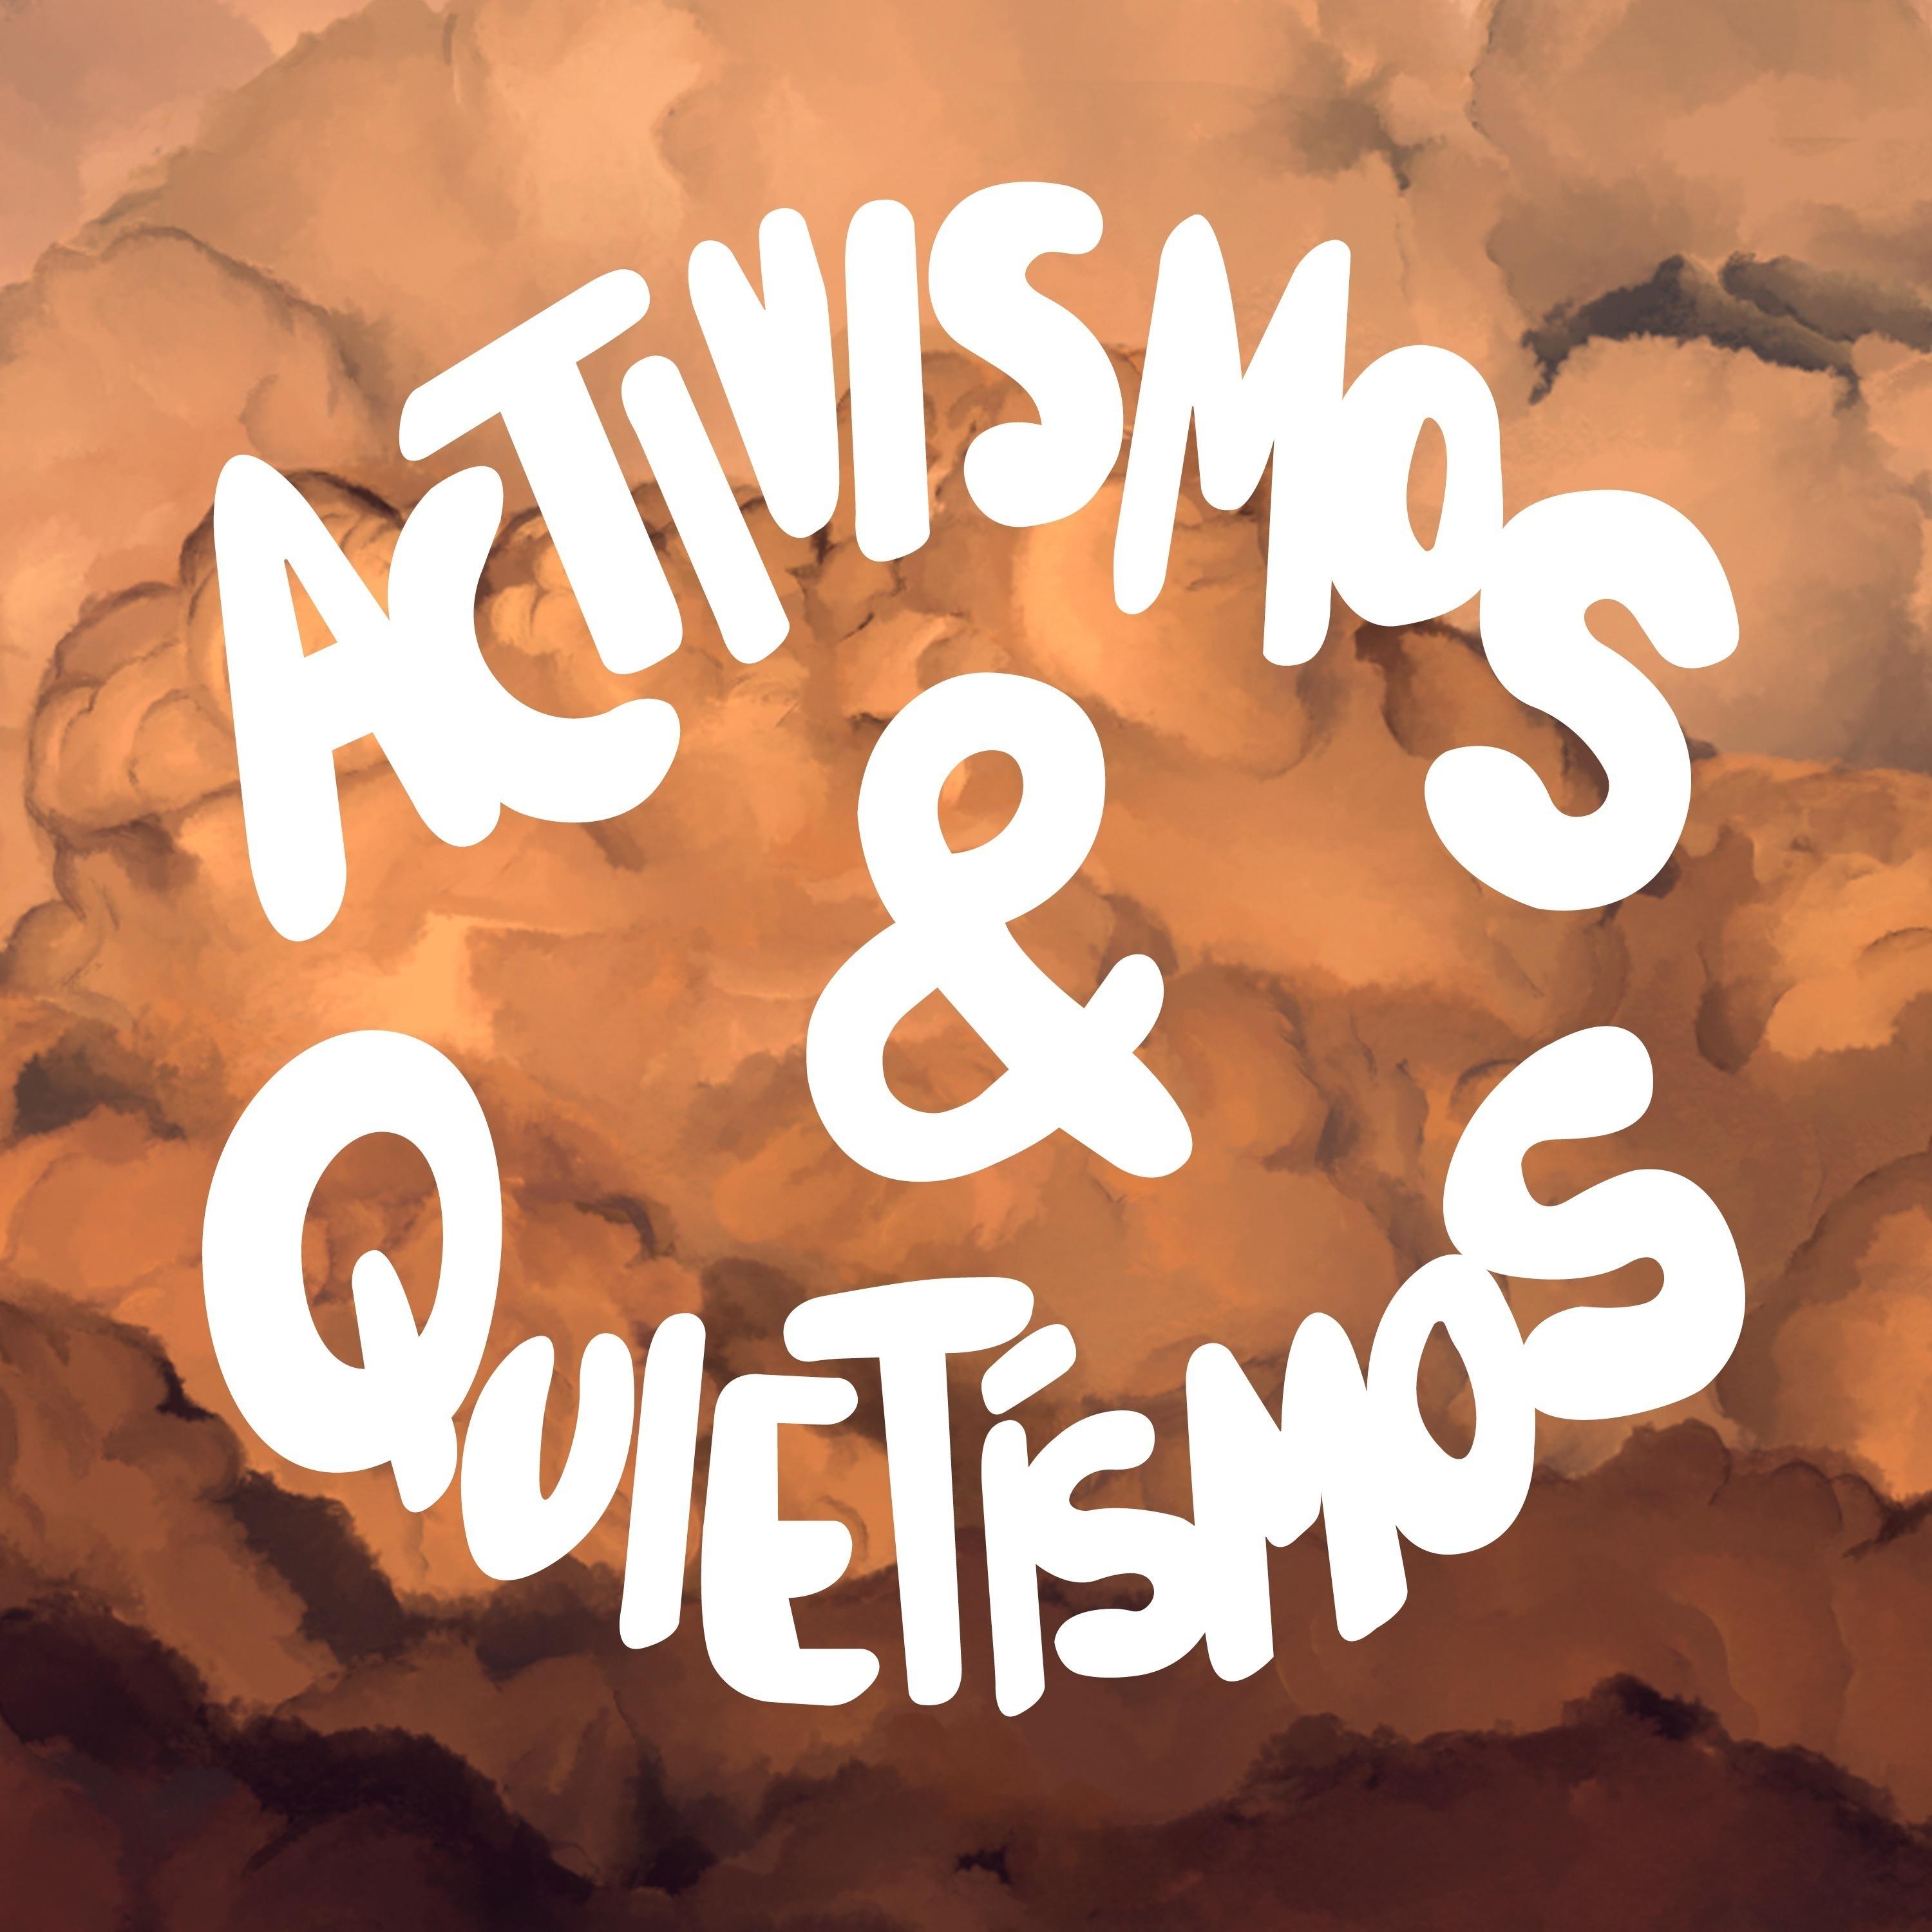 Activismos & Quietismos